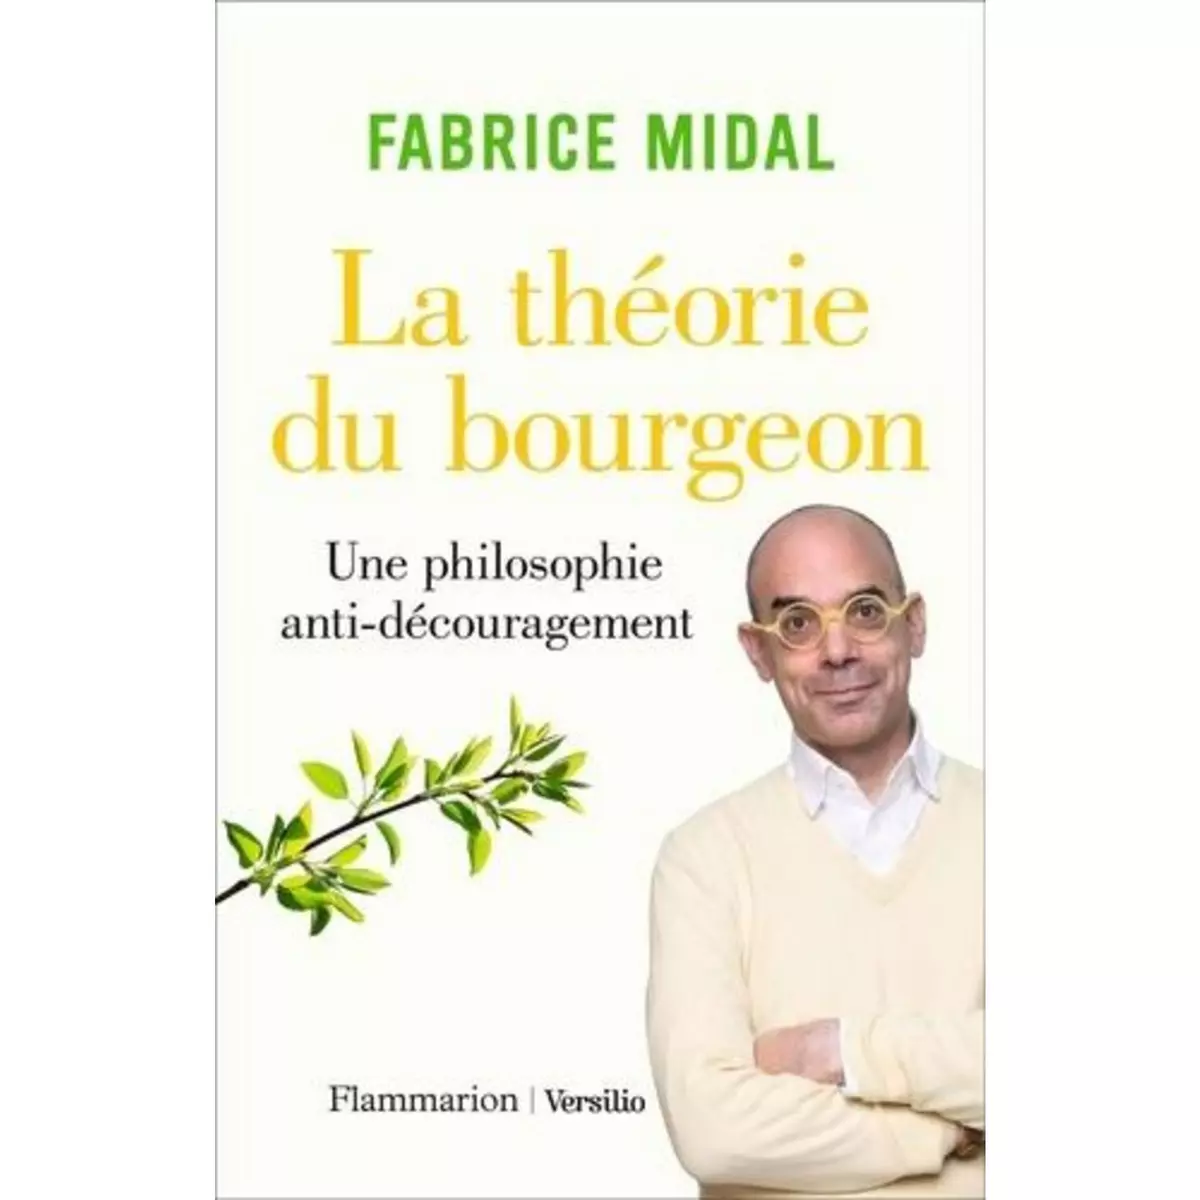  LA THEORIE DU BOURGEON. UNE PHILOSOPHIE ANTI-DECOURAGEMENT, Midal Fabrice